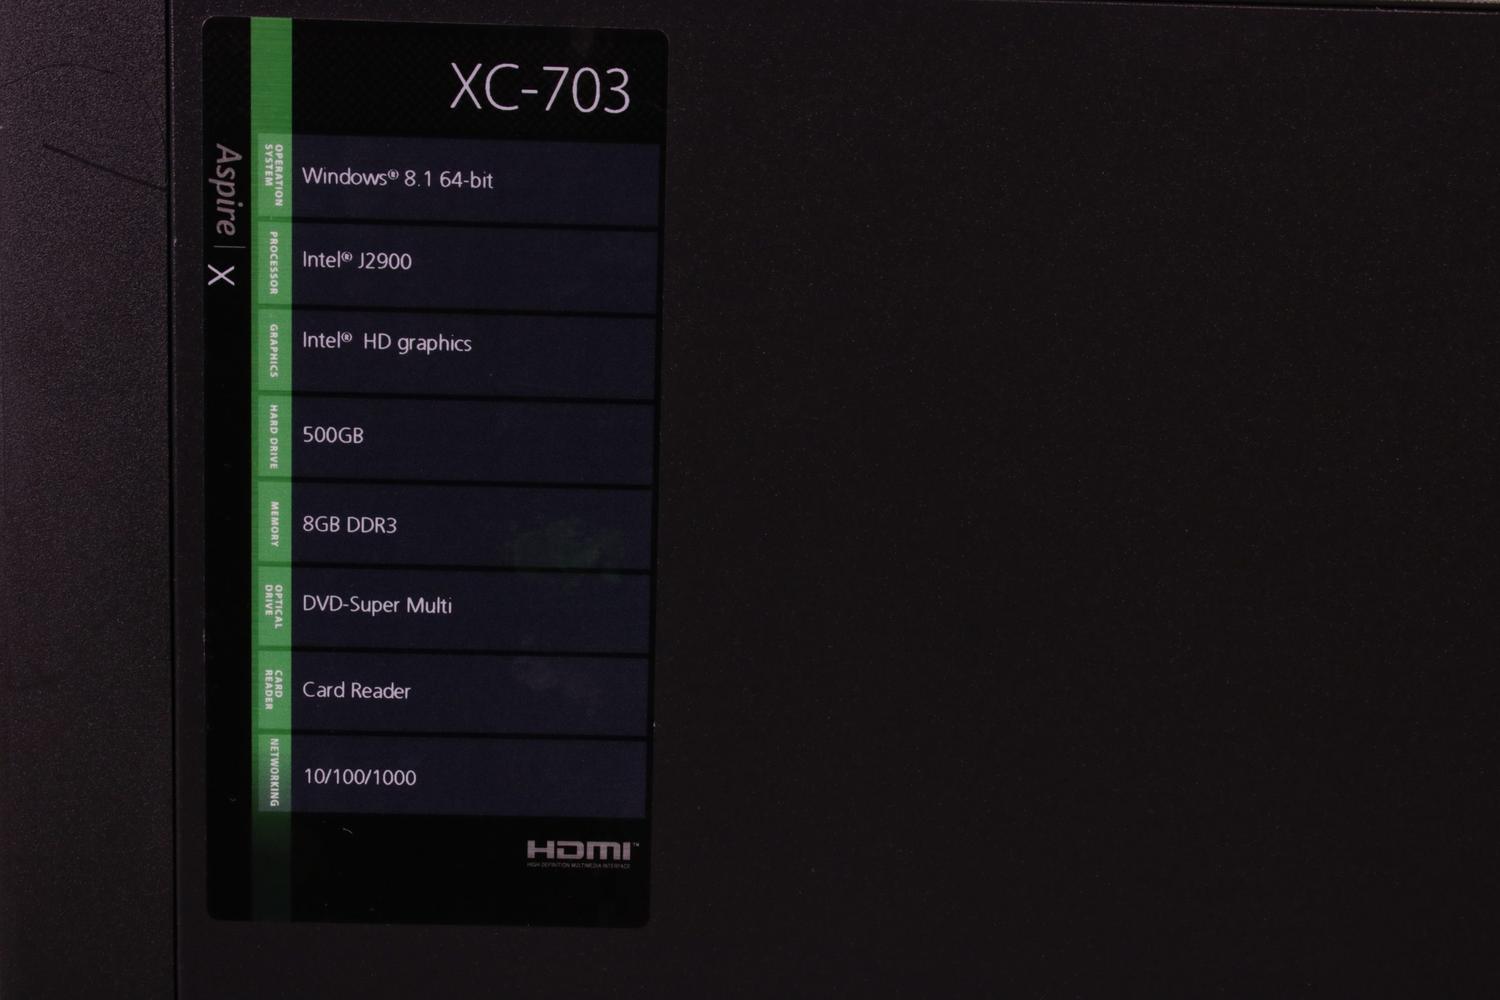 Acer Aspire XC-703 Competent multitasker PC